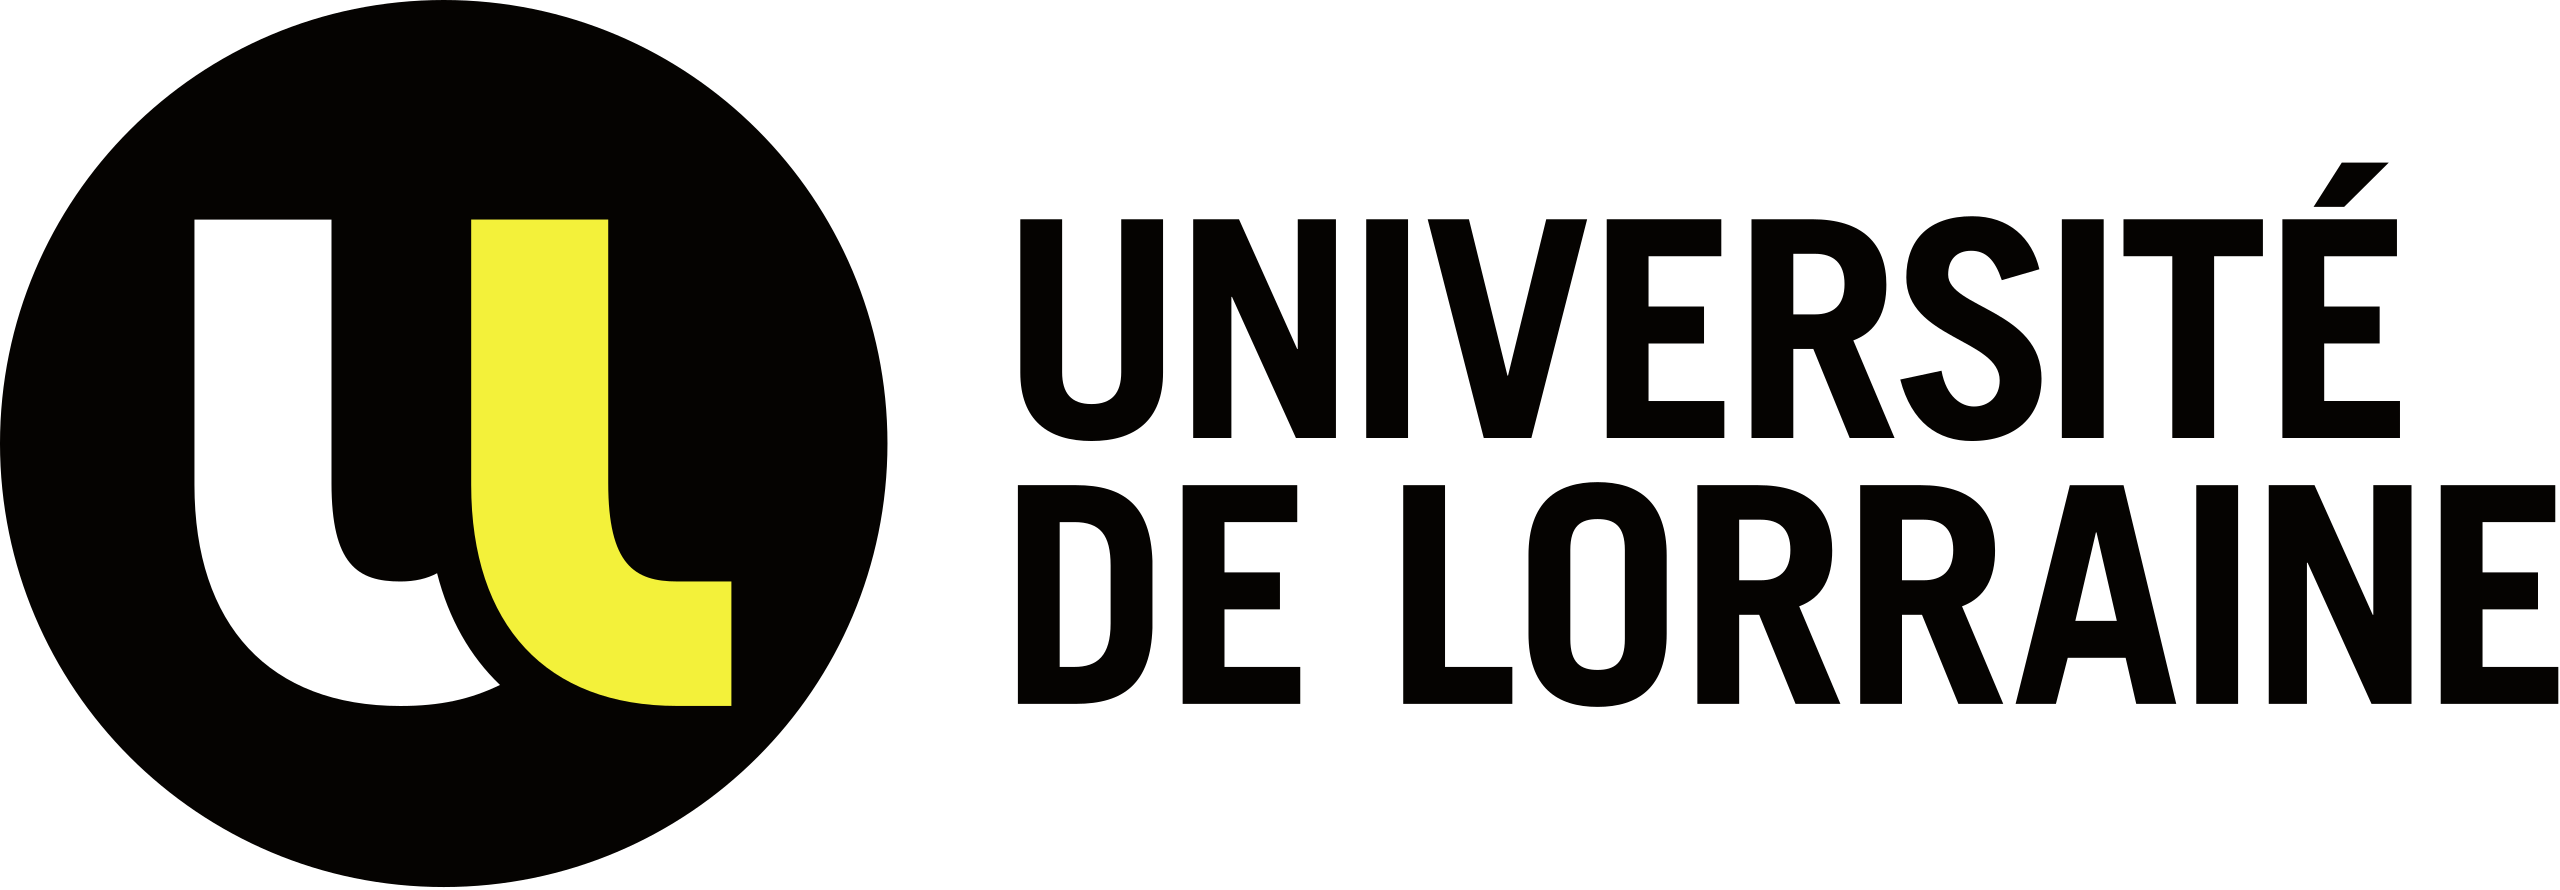 Universidad de Lorraine